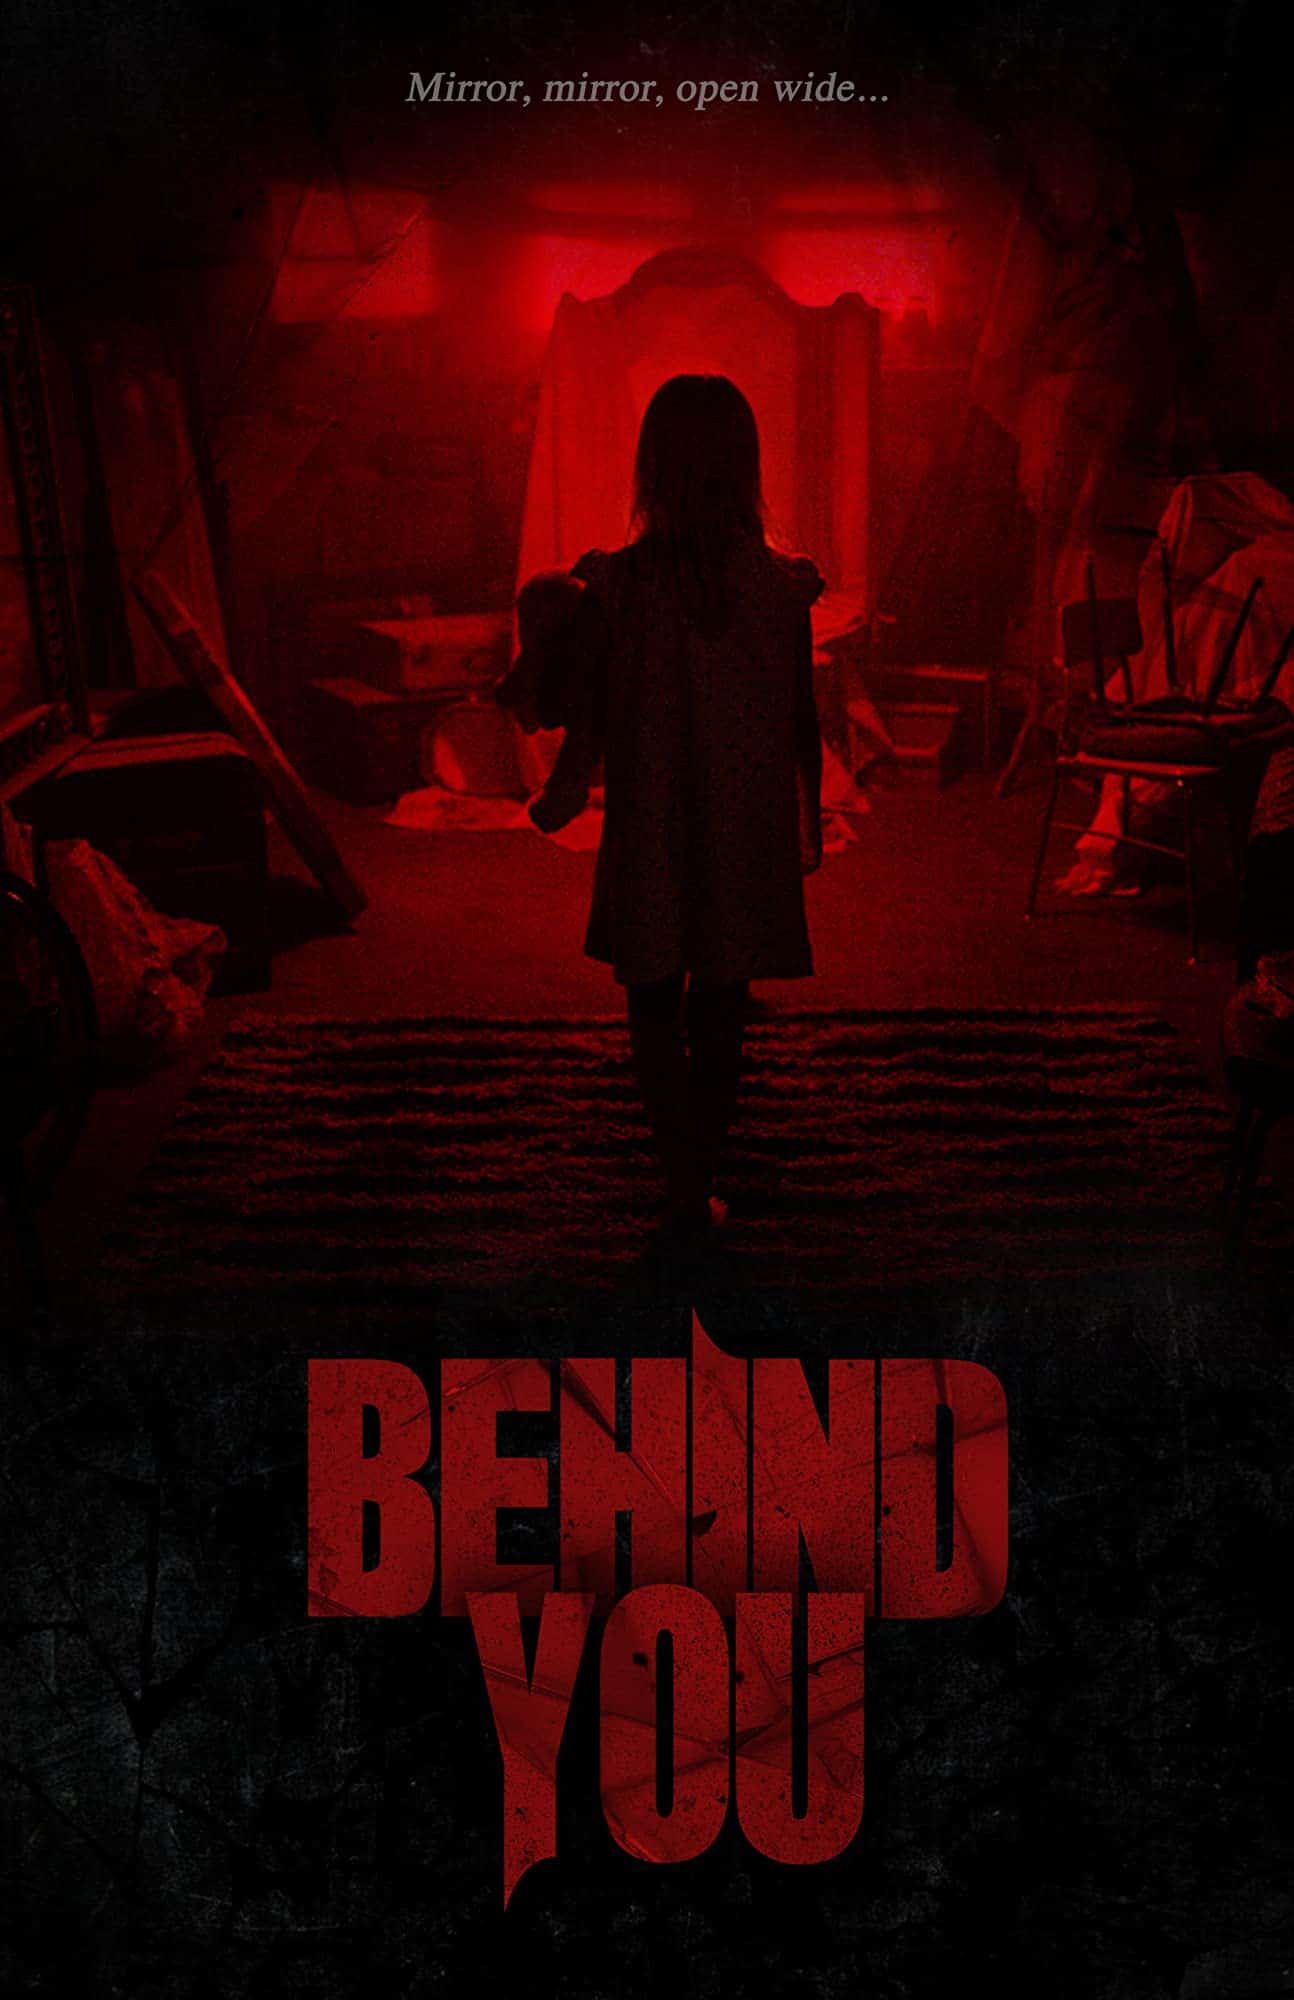 Behind You - Teaser Poster